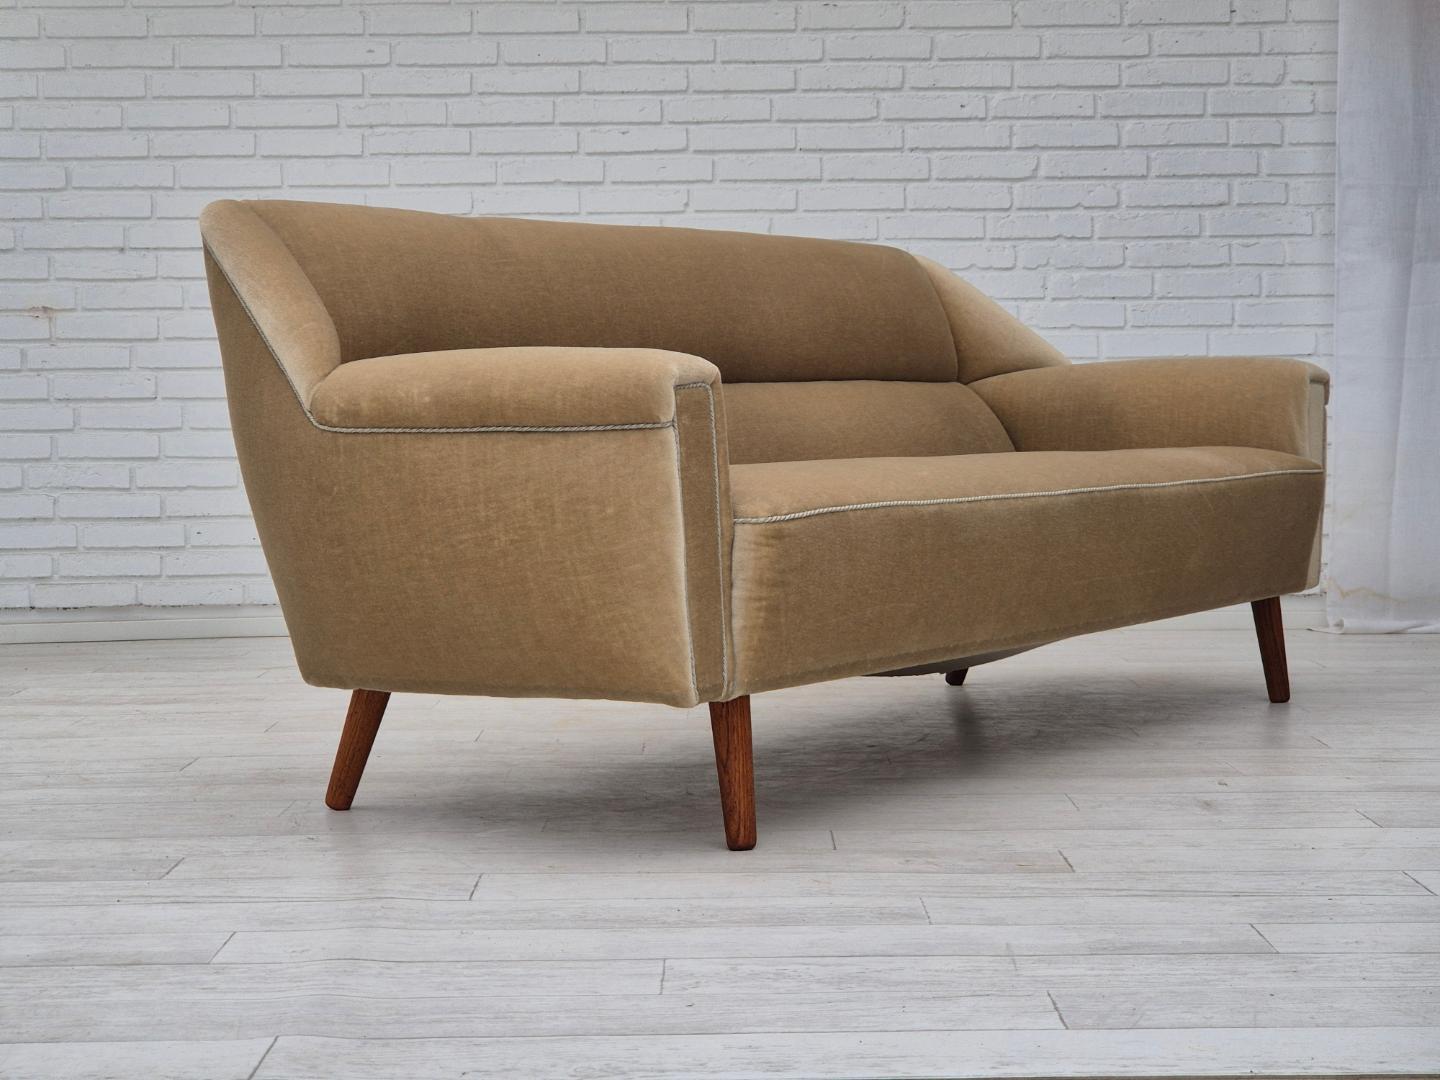 1960s, Danish design by Kurt Østervig for Rolschau Møbler, 3 seater sofa, model 57, original condition.